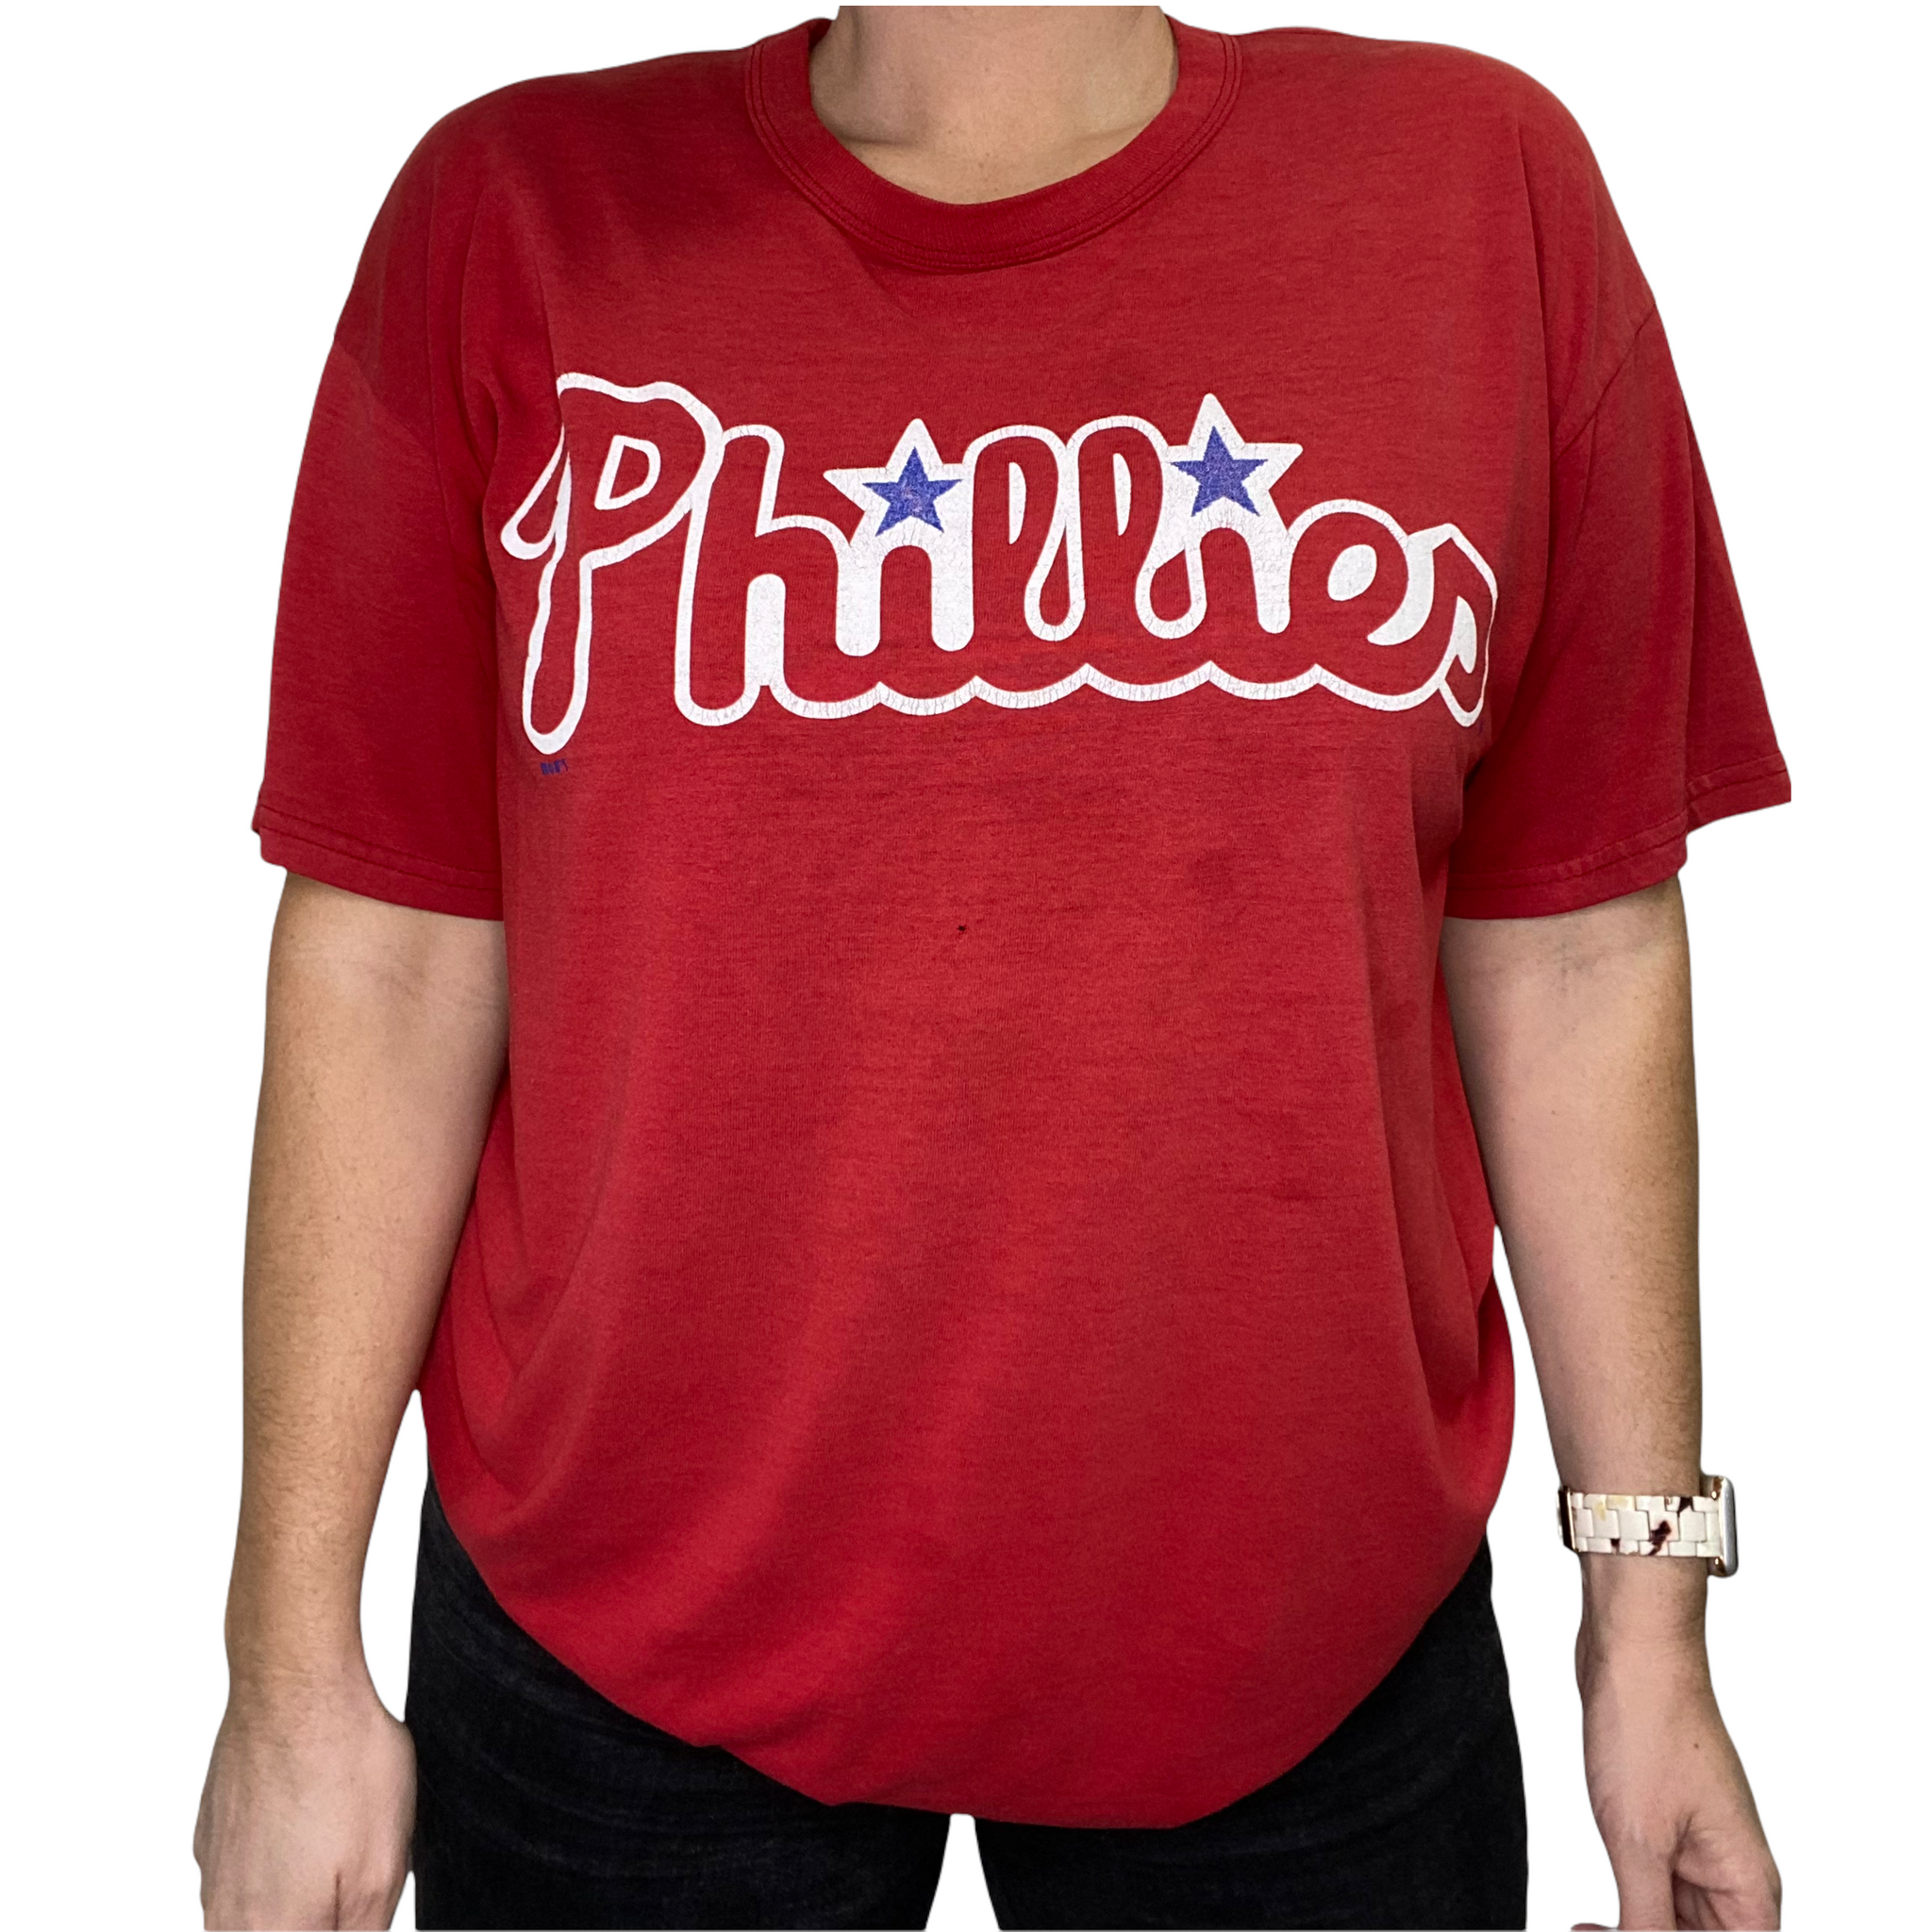 Philadelphia Phillies 2T Size MLB Shirts for sale